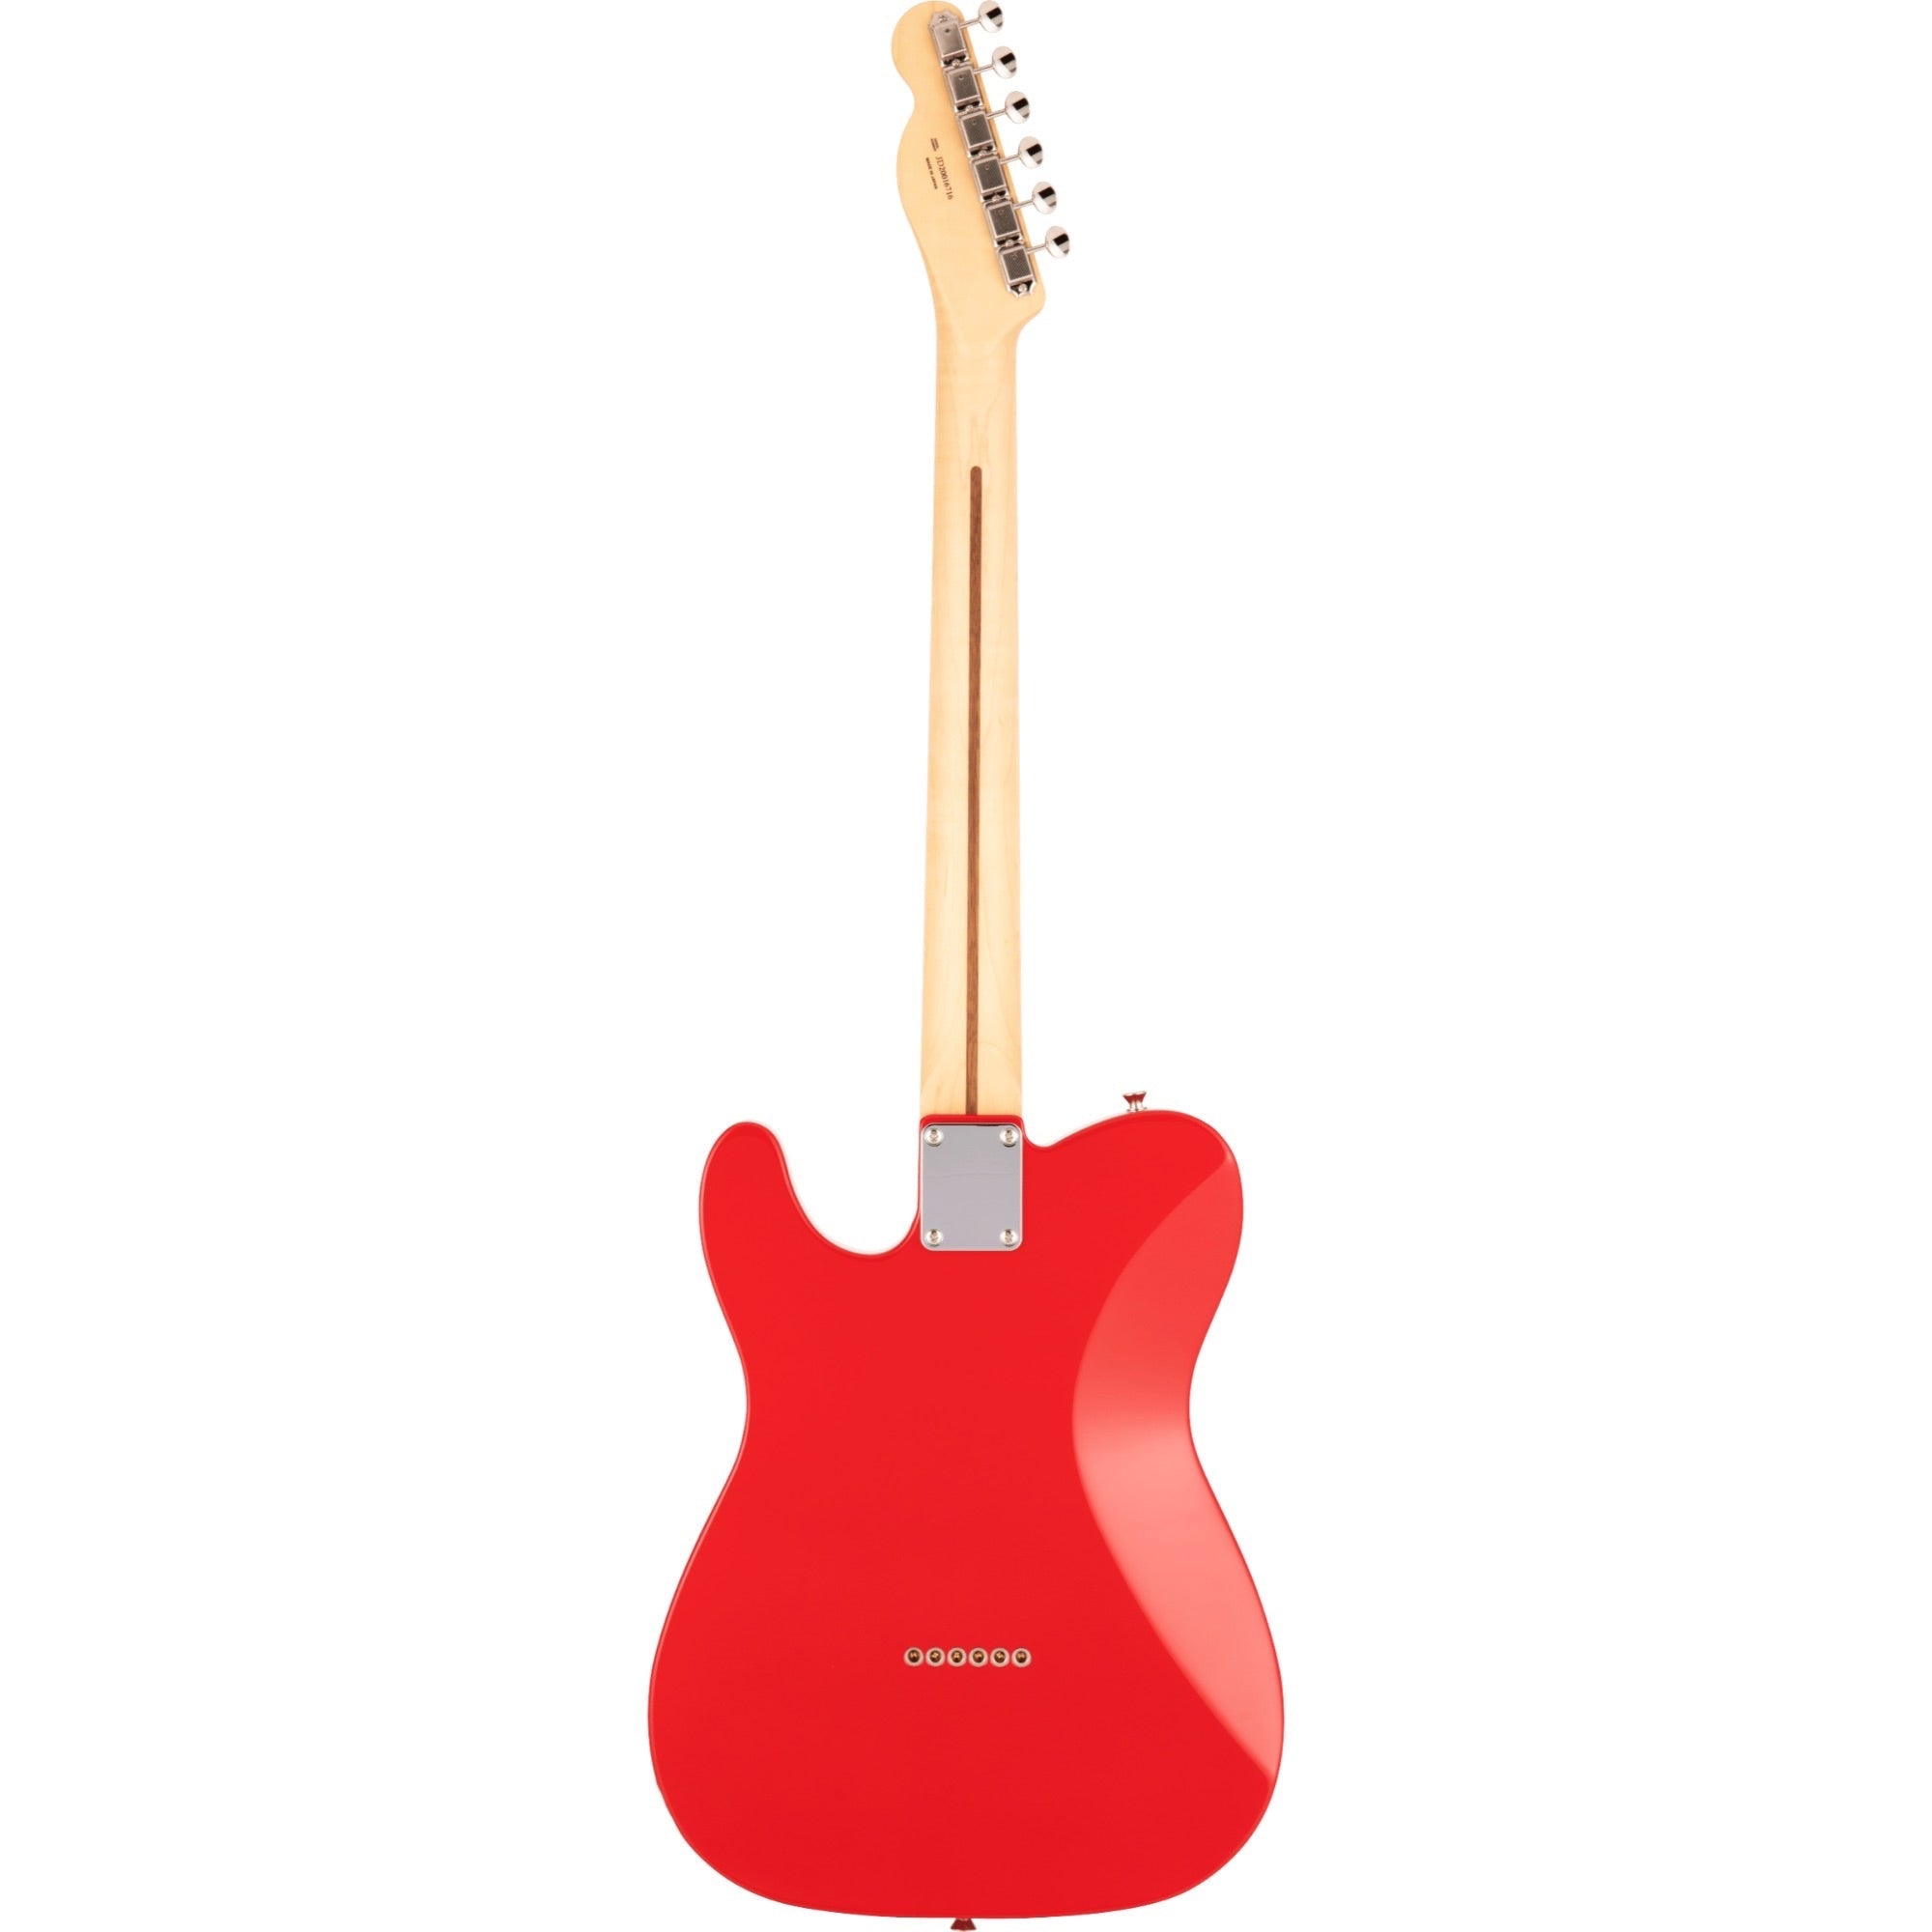 Fender Made in Japan Hybrid II Telecaster, Rosewood Fingerboard, Modena Red